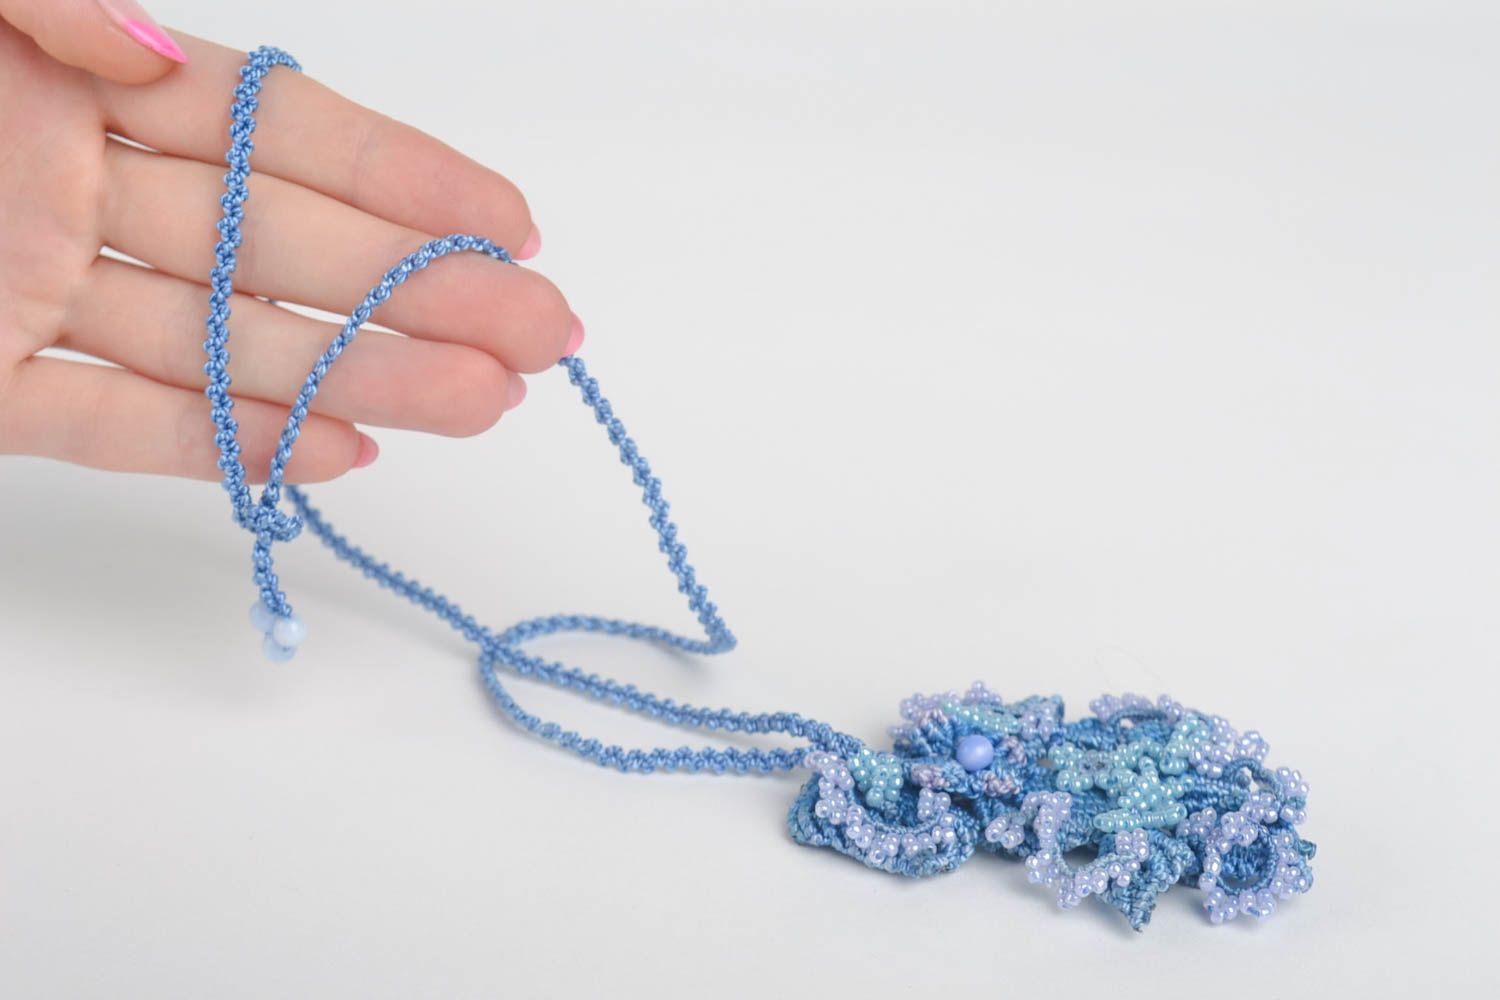 Handmade pendant designer pendant unusual jewelry macrame pendant gift ideas photo 5